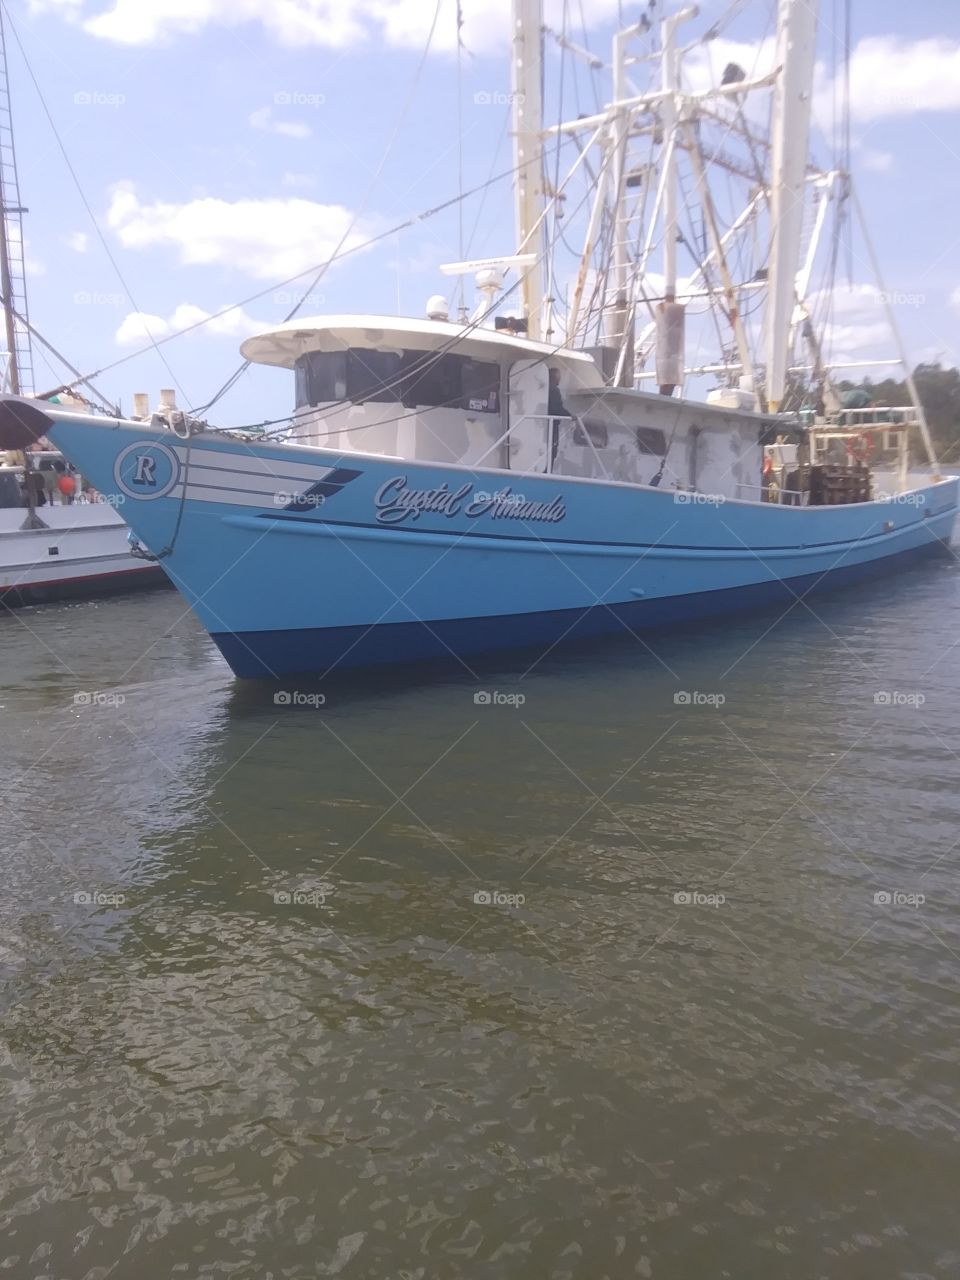 #crystalamamda #shrimp #outfitters #shrimper #boat #water